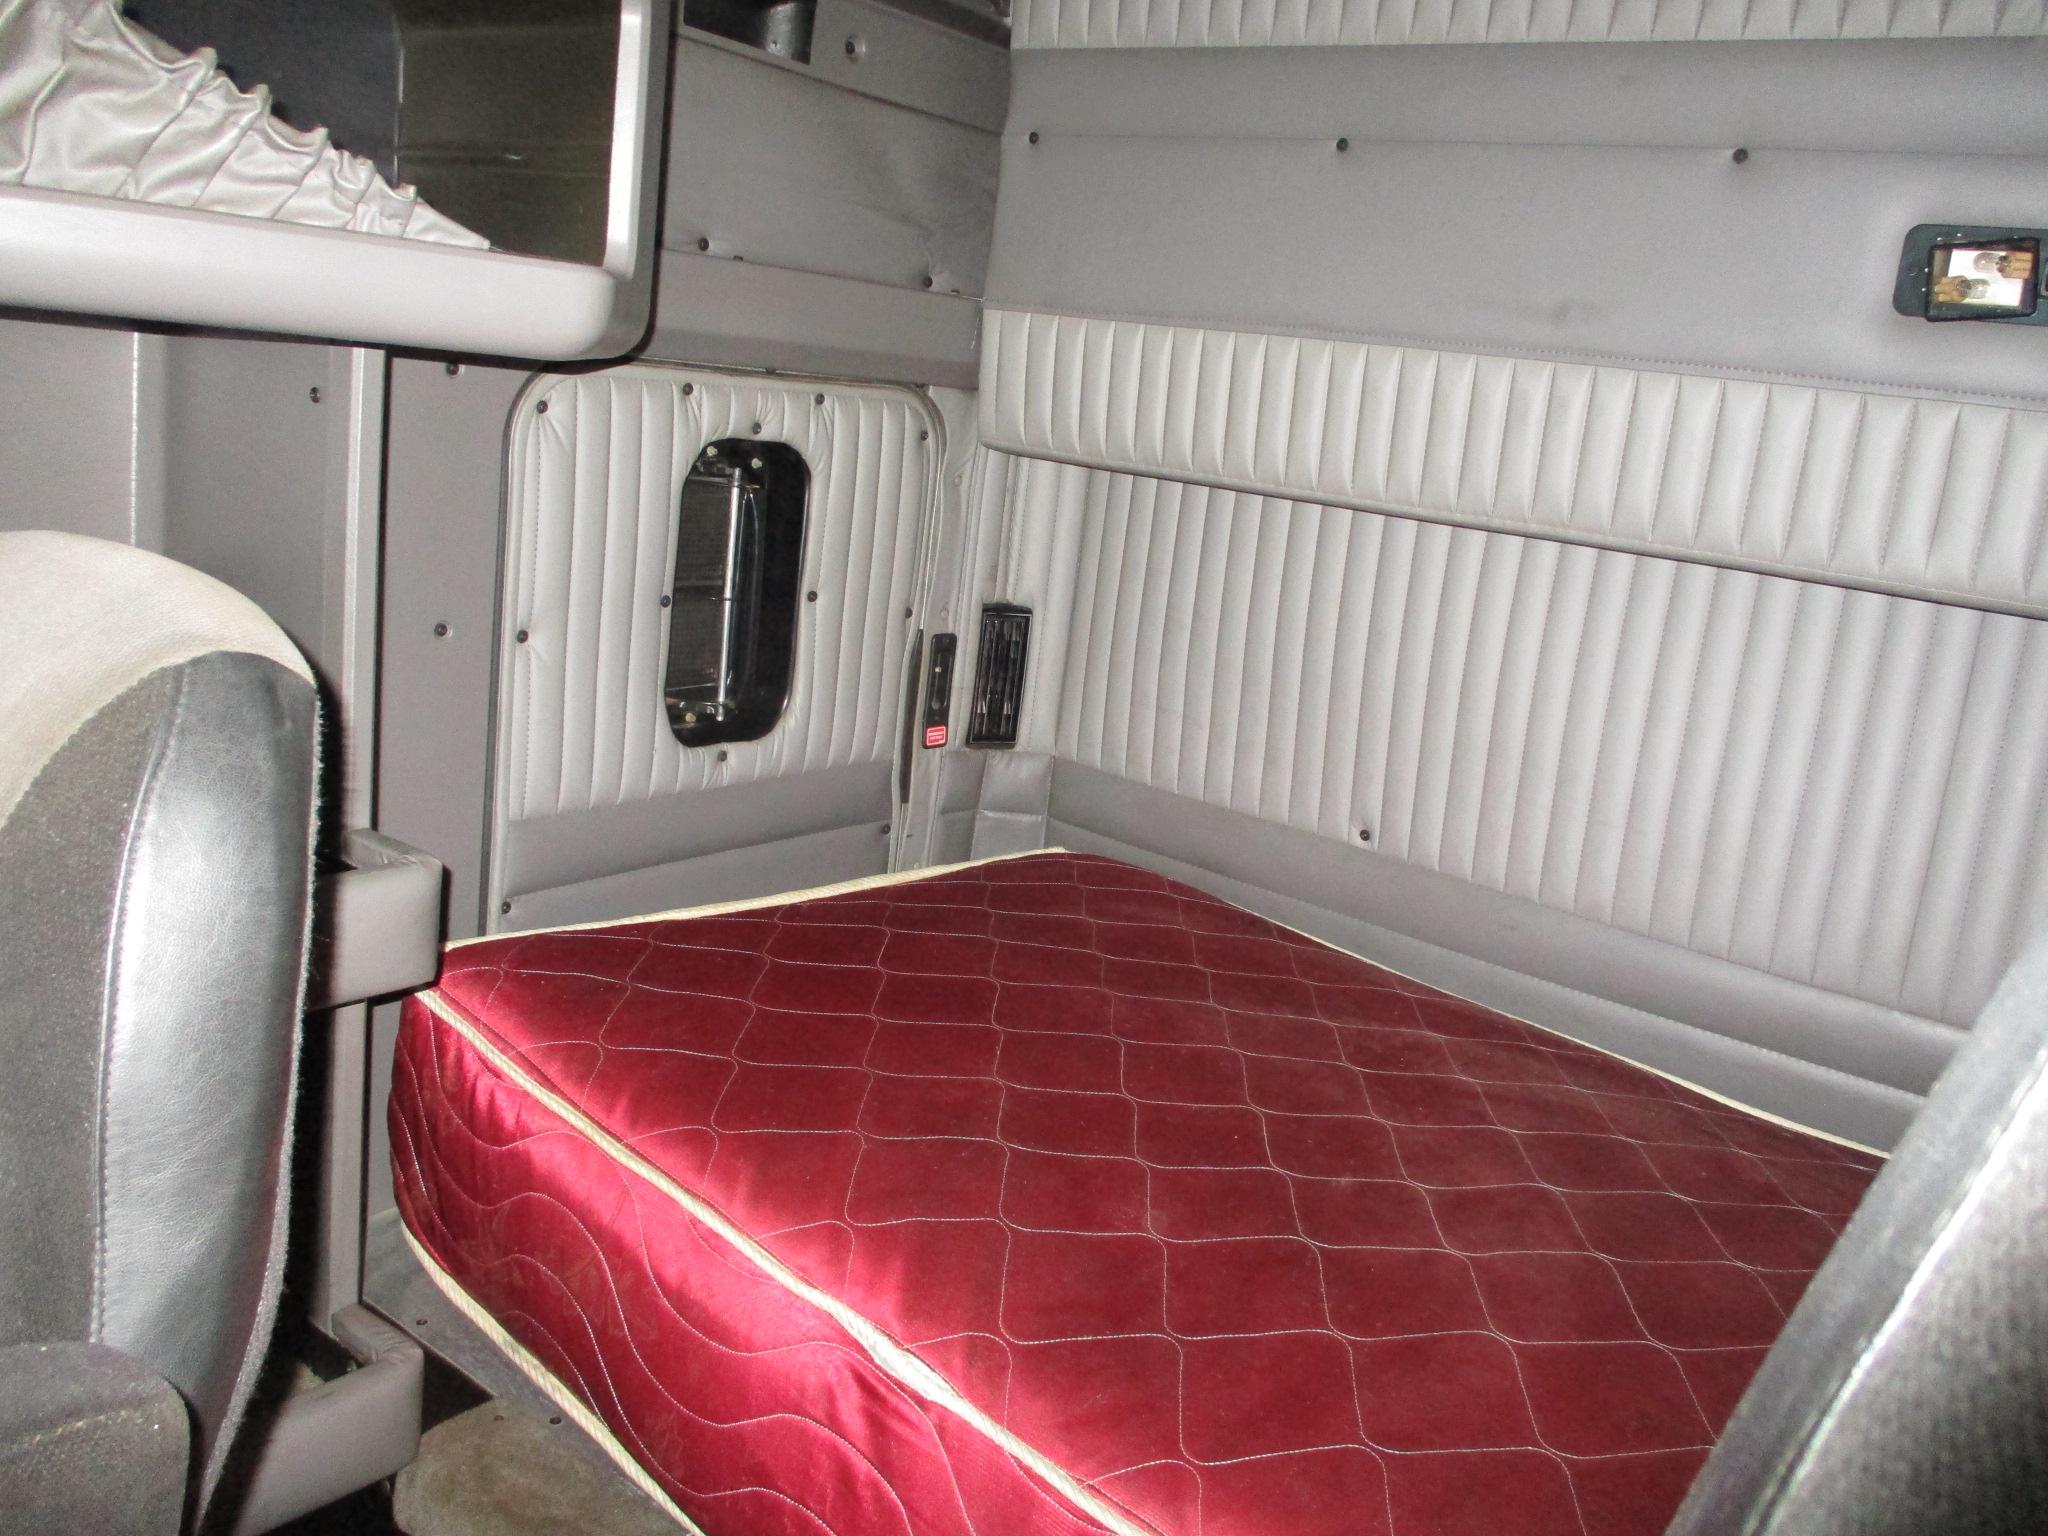 2006 Kenworth T600, 805,106 Act second owner miles, Aerocab double bunk sleeper, Car C-15, 475 hp